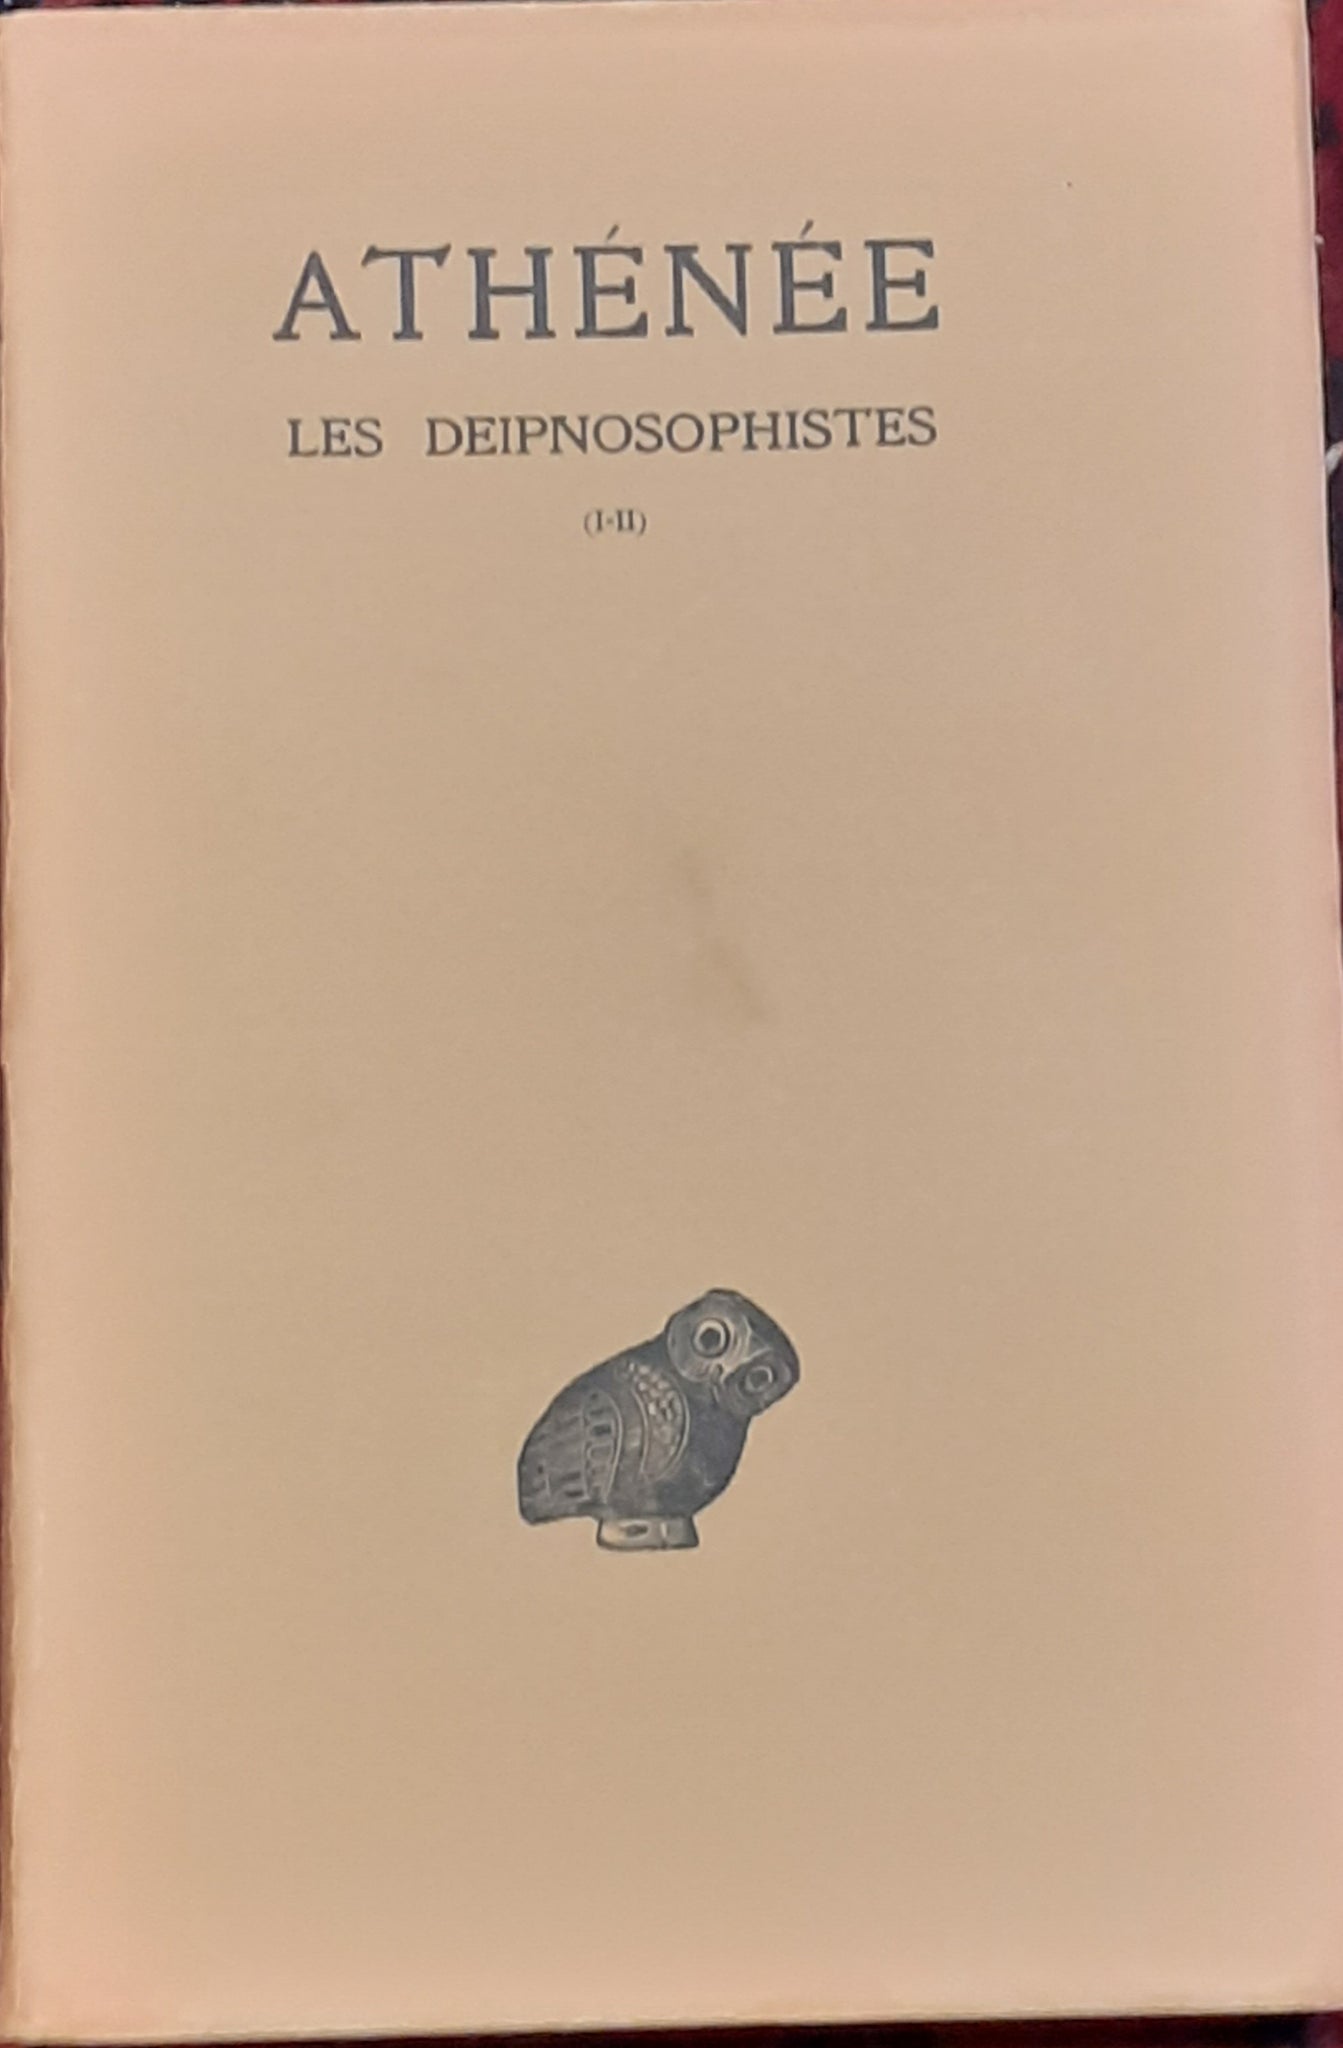 Les Deipnosophistes.